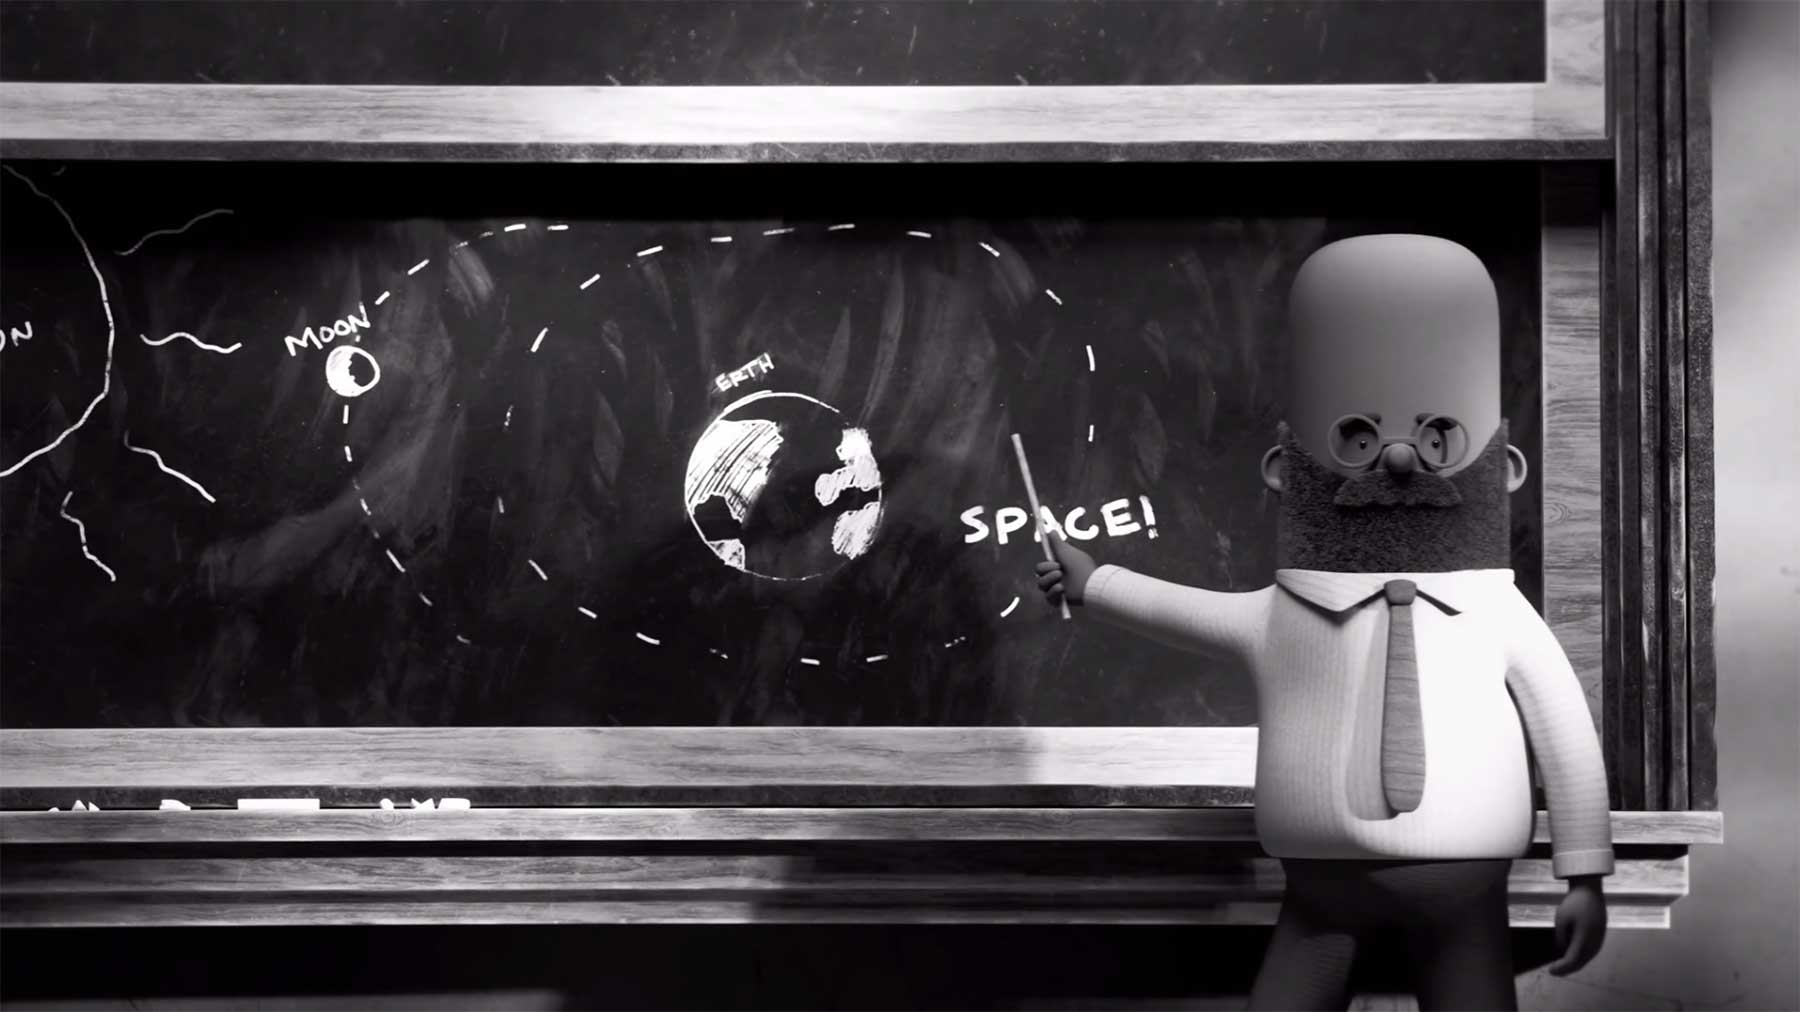 Kurzfilm: "The Ultimate Space Race" The-ultimate-space-race-kurzfilm-animierte-geschichte 